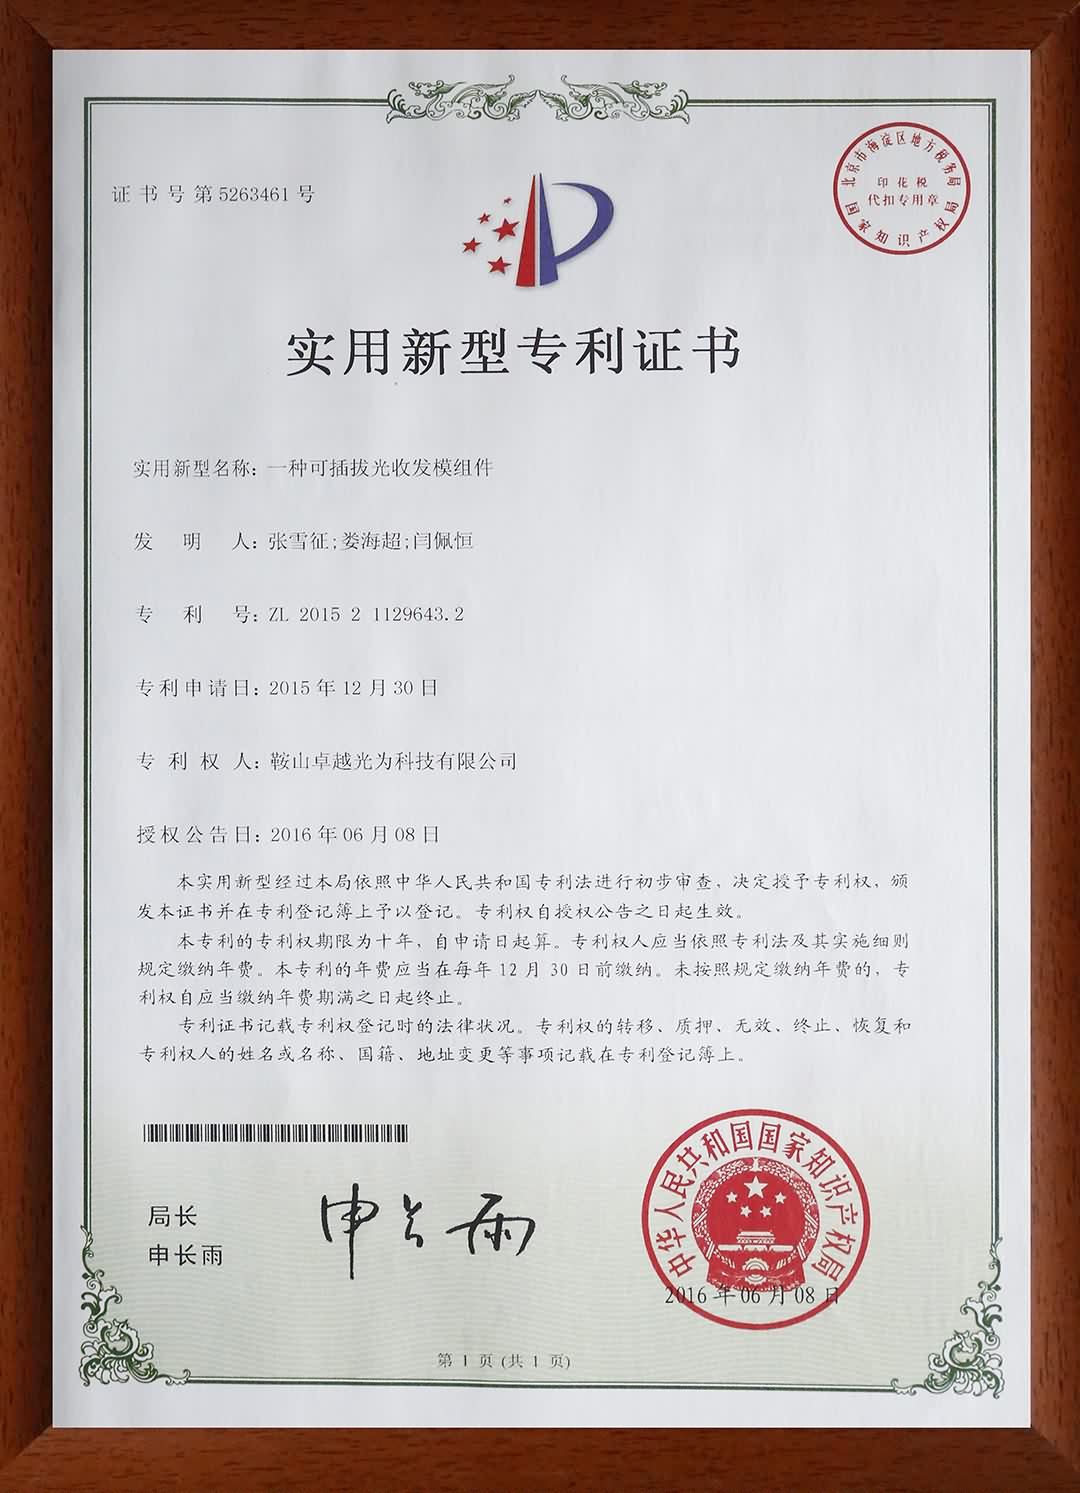 Paten certificate 1